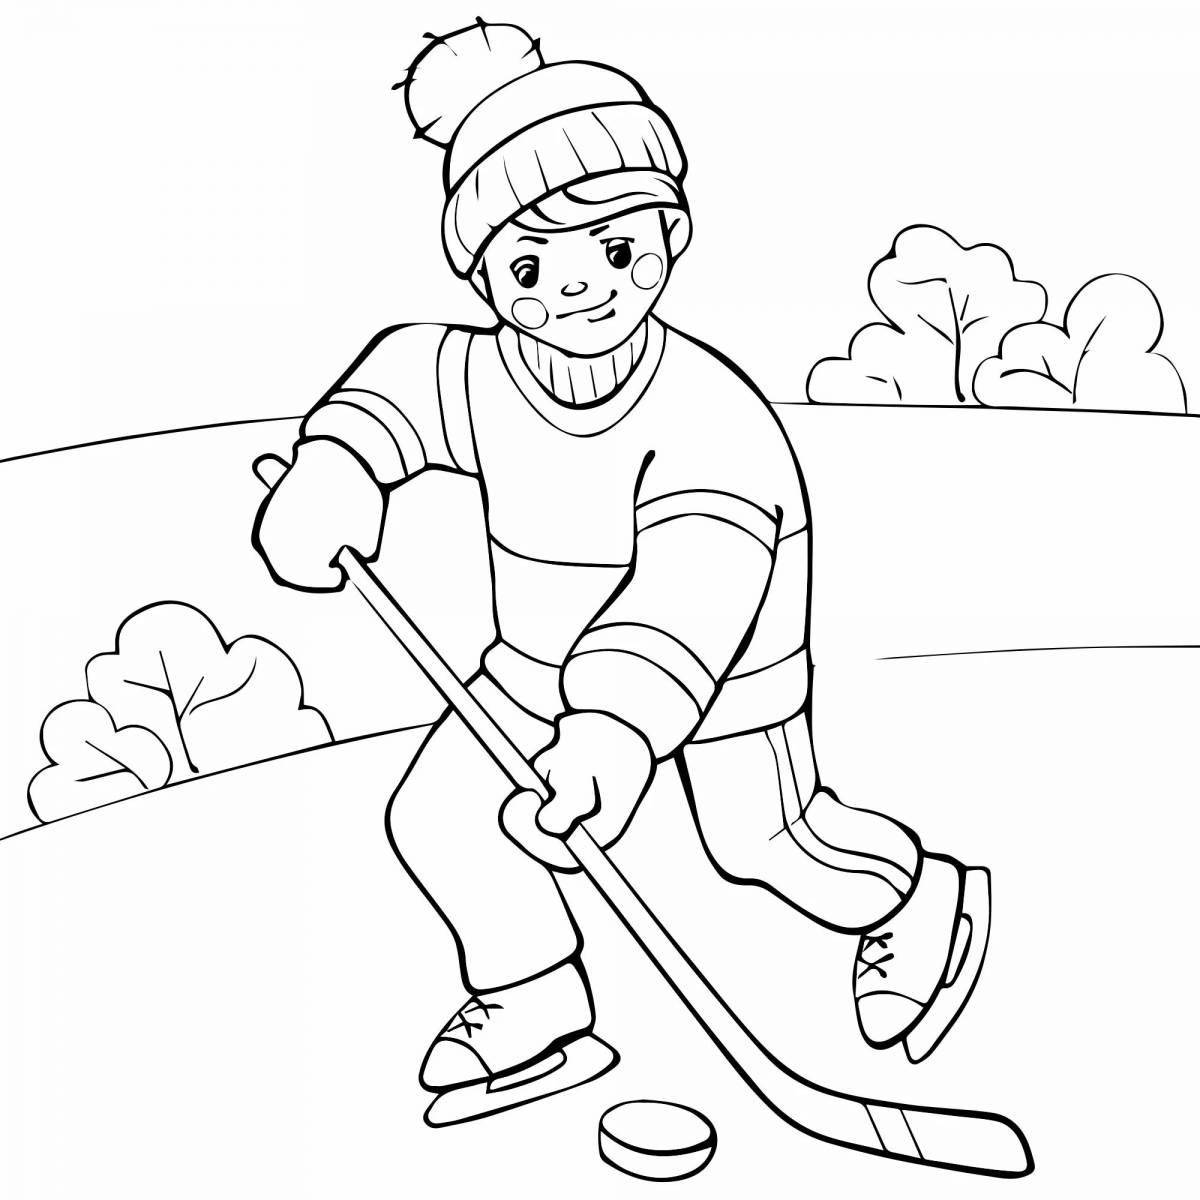 On winter sports #2